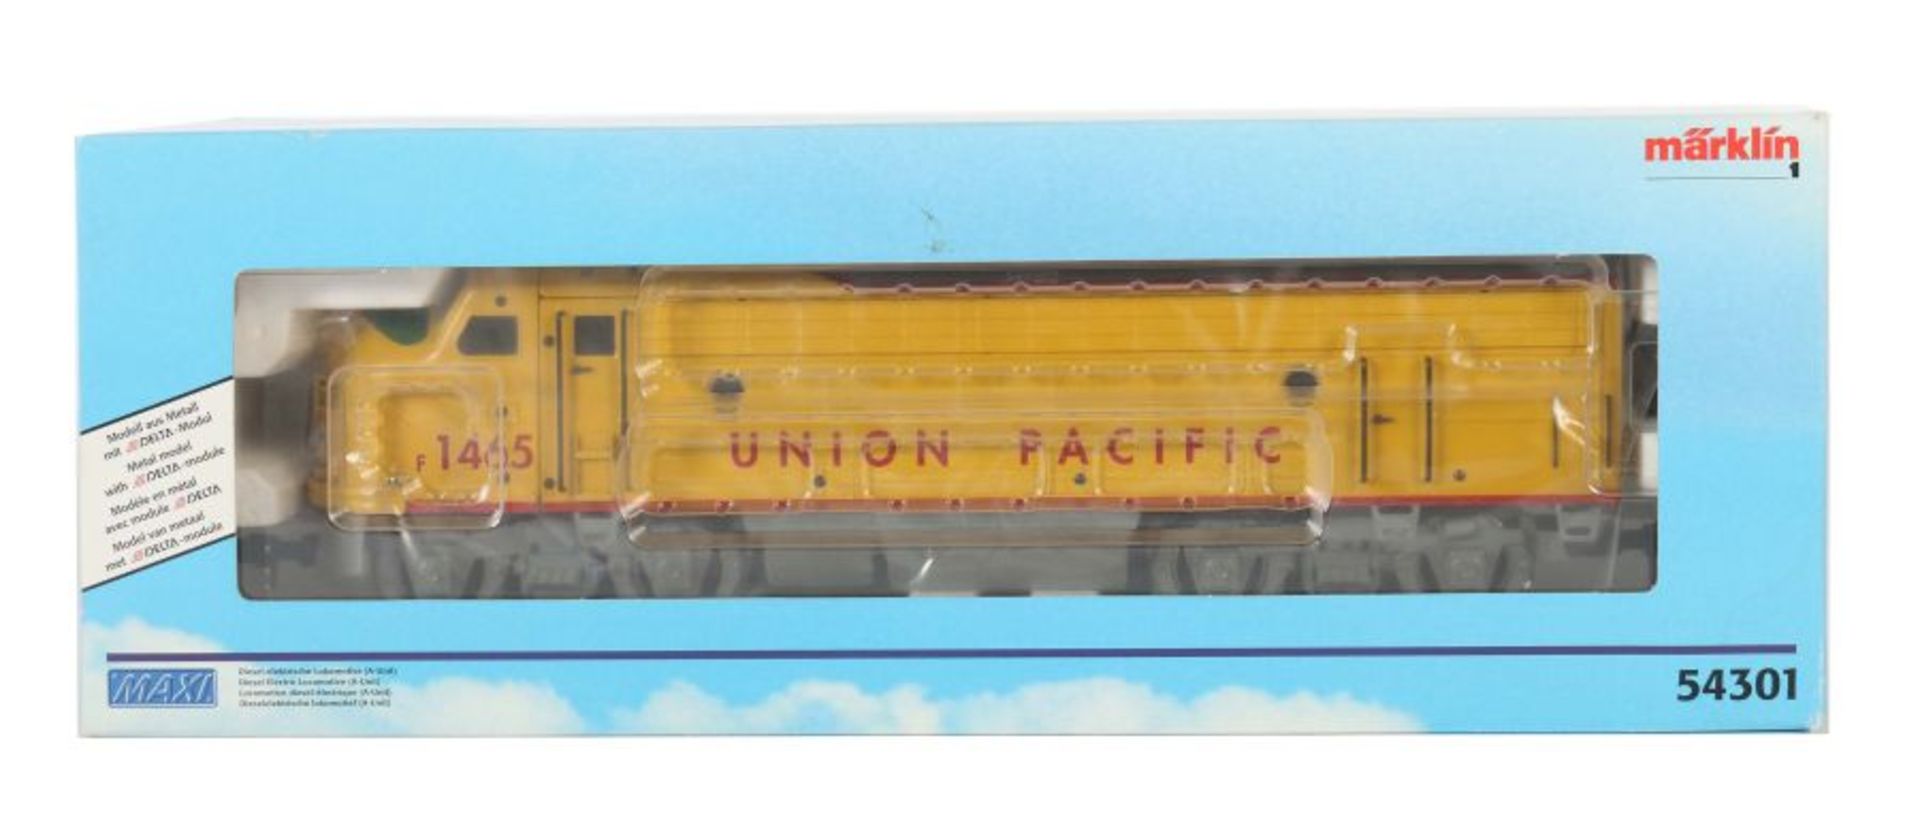 Diesellok A-Unit der "Union Pacific" Märklin, Modellnr. 54301, Maxi Spur 1, Replika, 4-achsige Lok